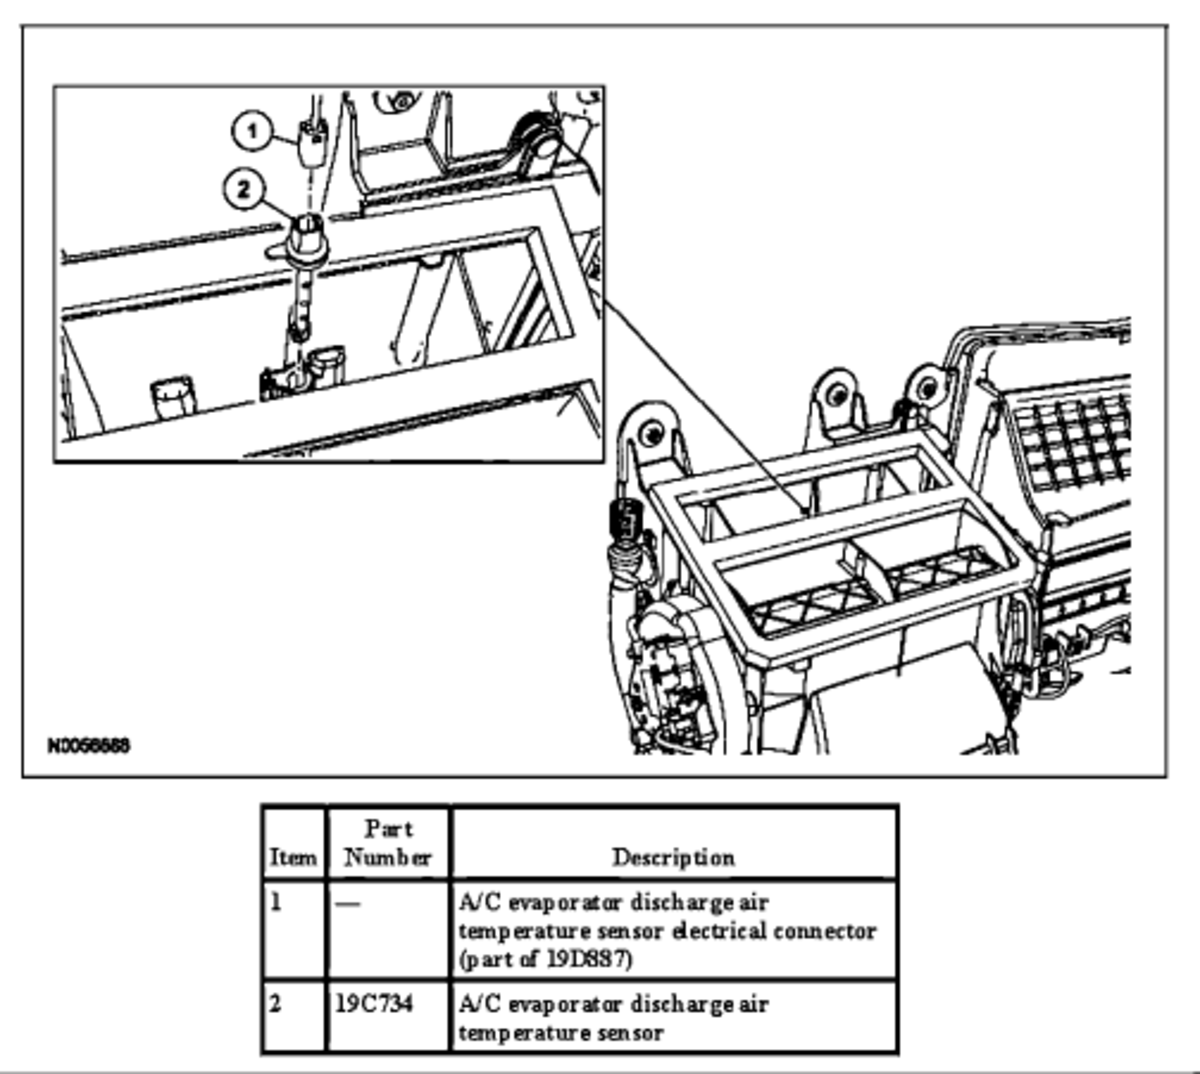 Ford Fusion A/C Compressor Won't Turn On | AxleAddict 2001 ford taurus sel fuse box 